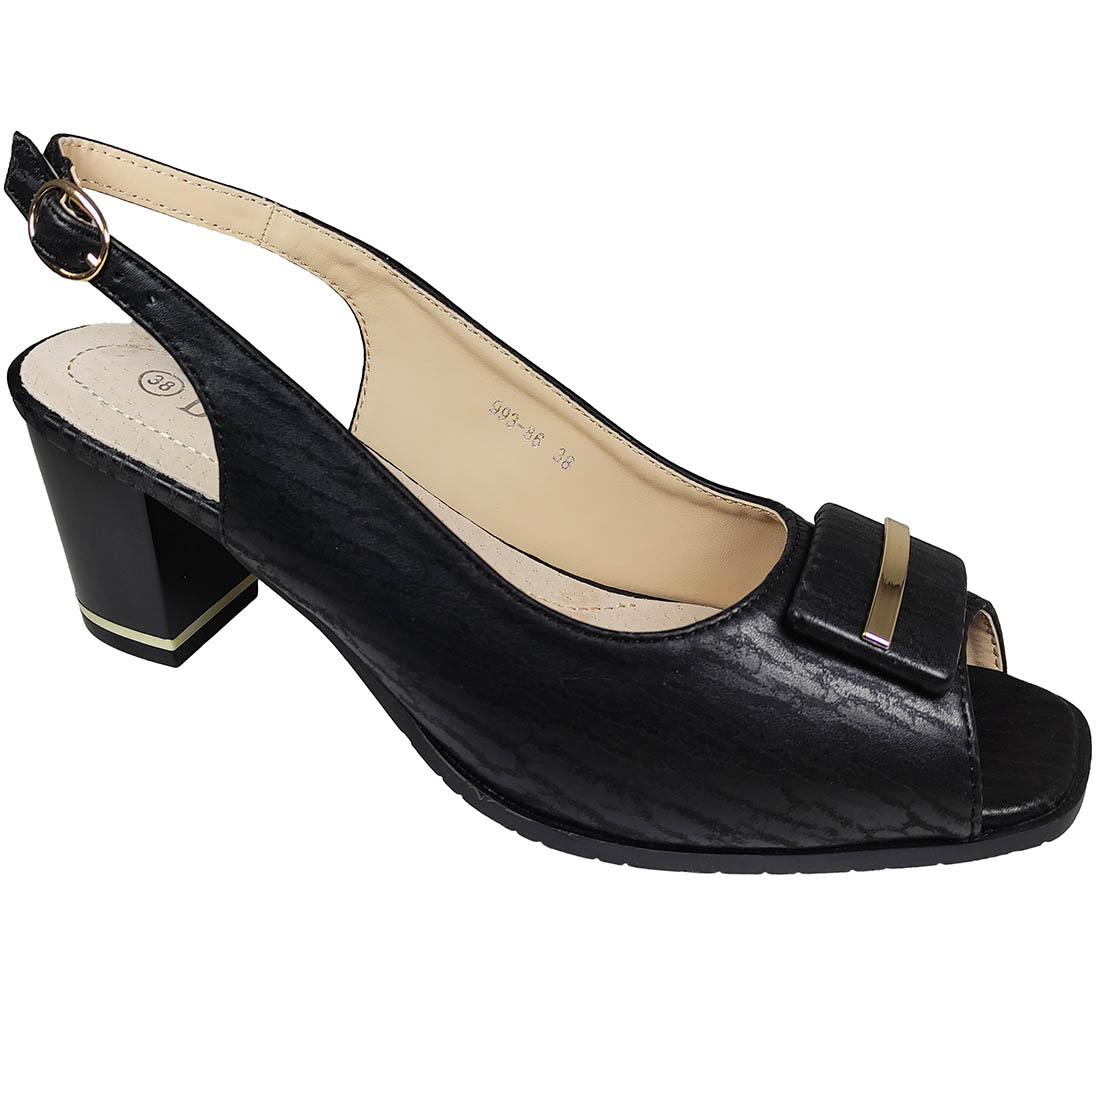 Leather Classic Formal wear Sandals B-Soft 993-86 Black